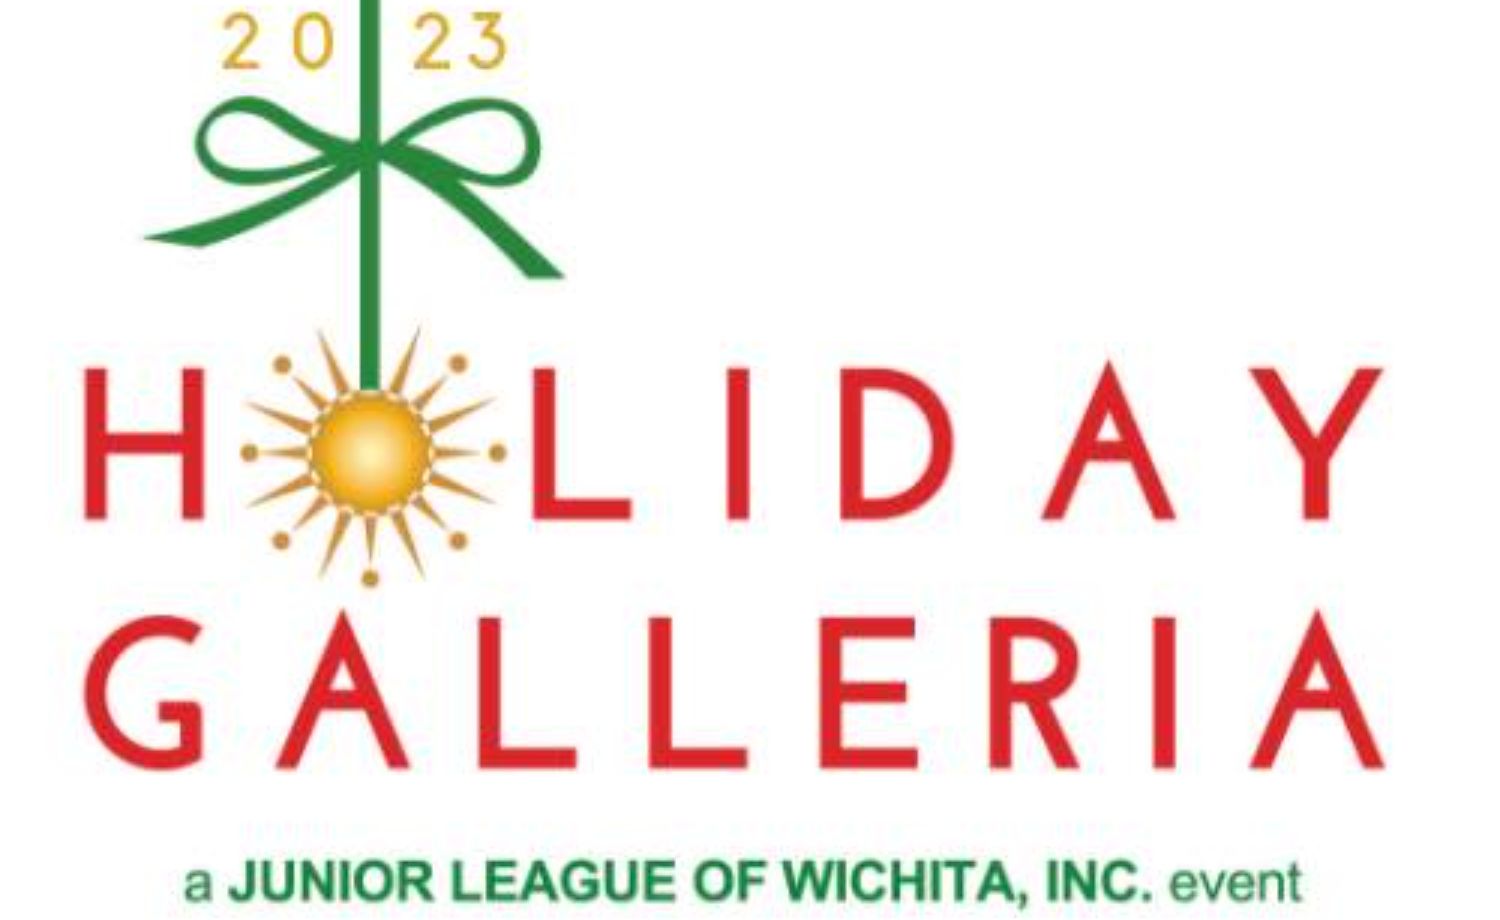 Holiday Galleria Oct 5-7